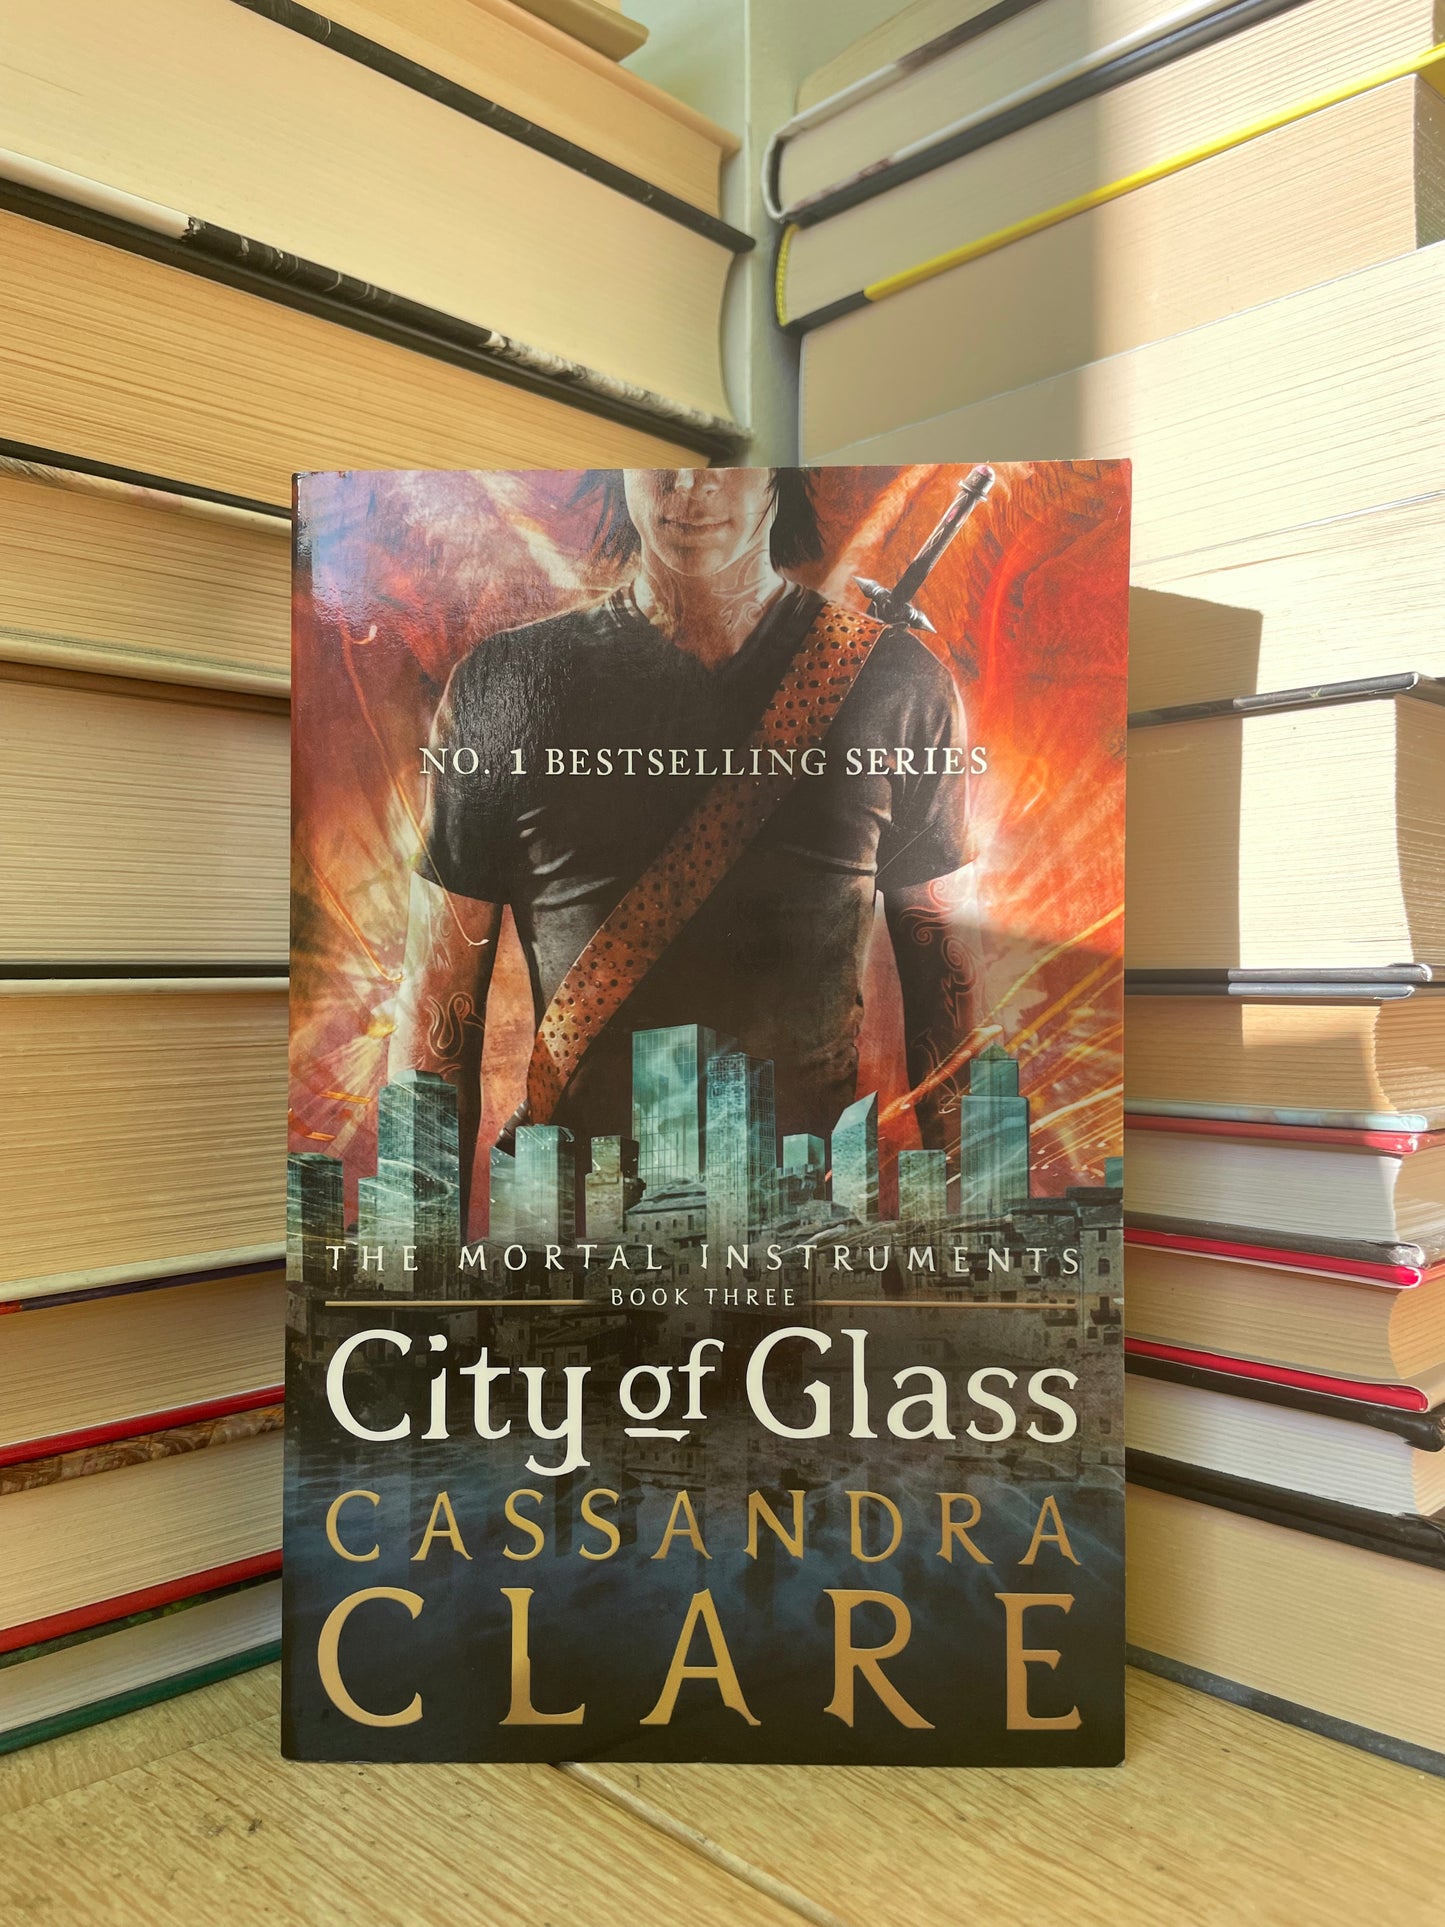 Cassandra Clarke - City of Glass: The Mortal Instruments